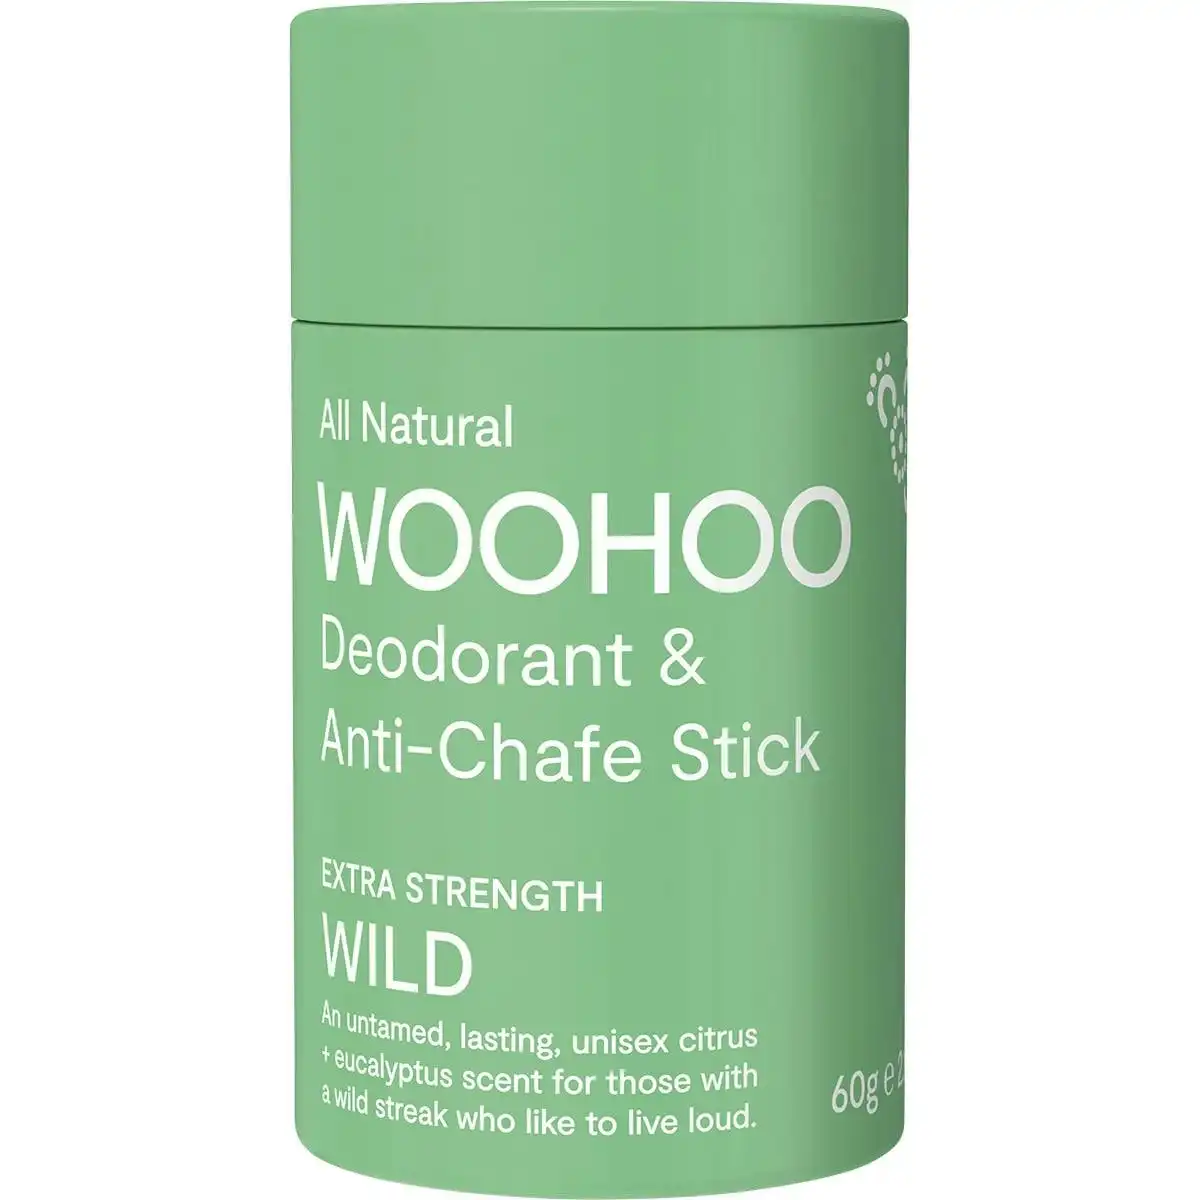 Woohoo Body Deodorant Stick Wild Extra Strength 60g